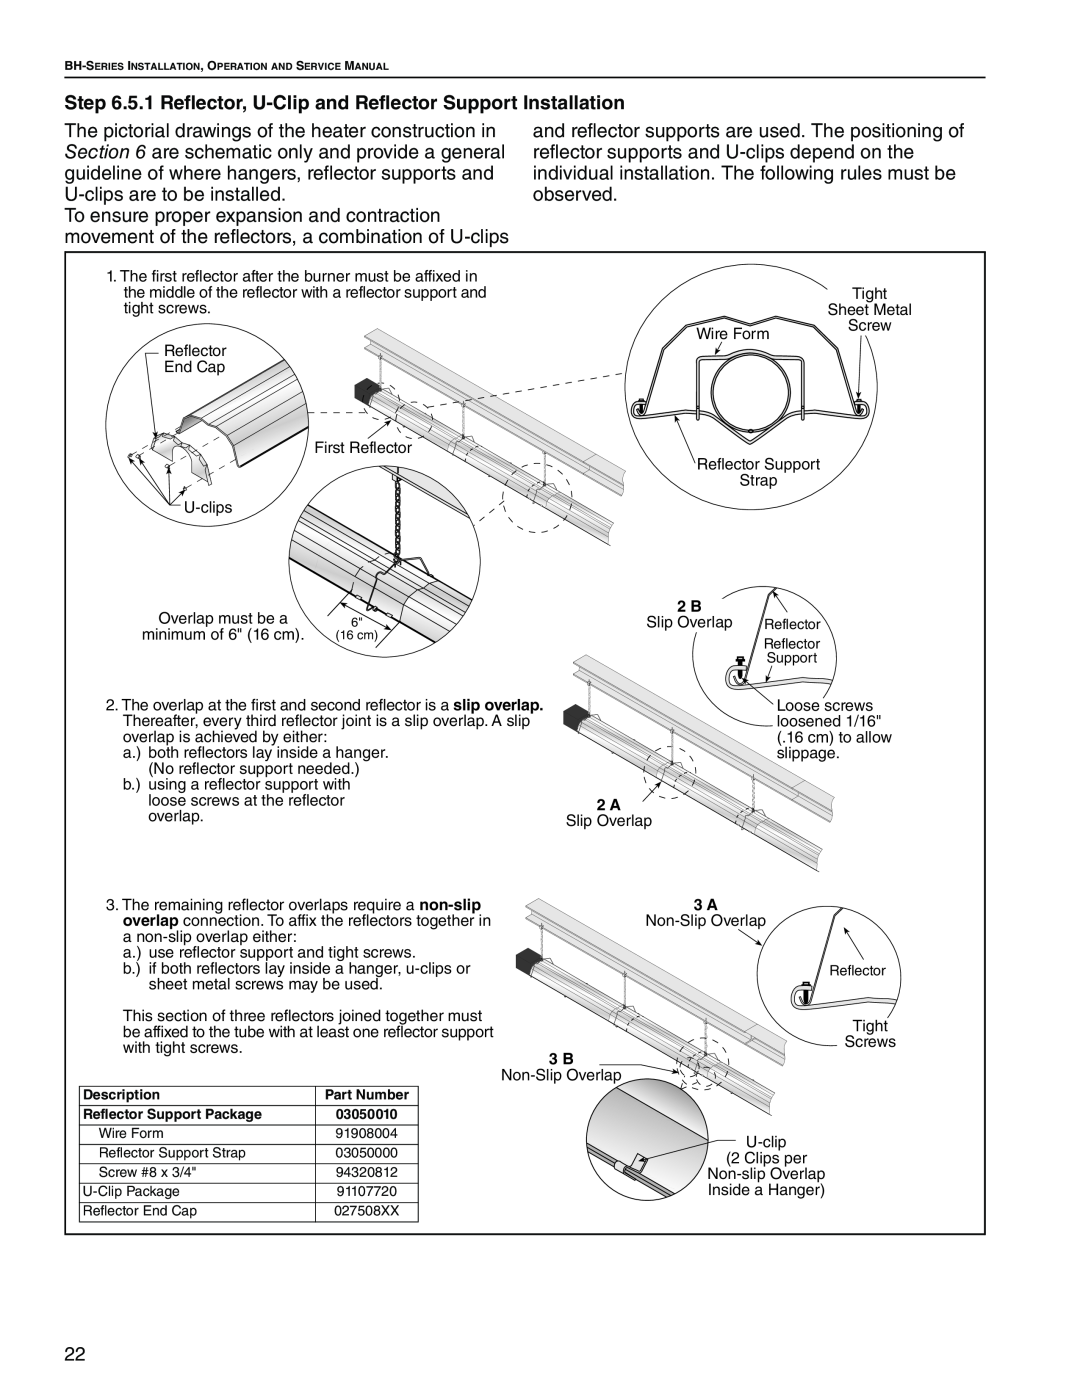 Roberts Gorden Linear Heater manual 